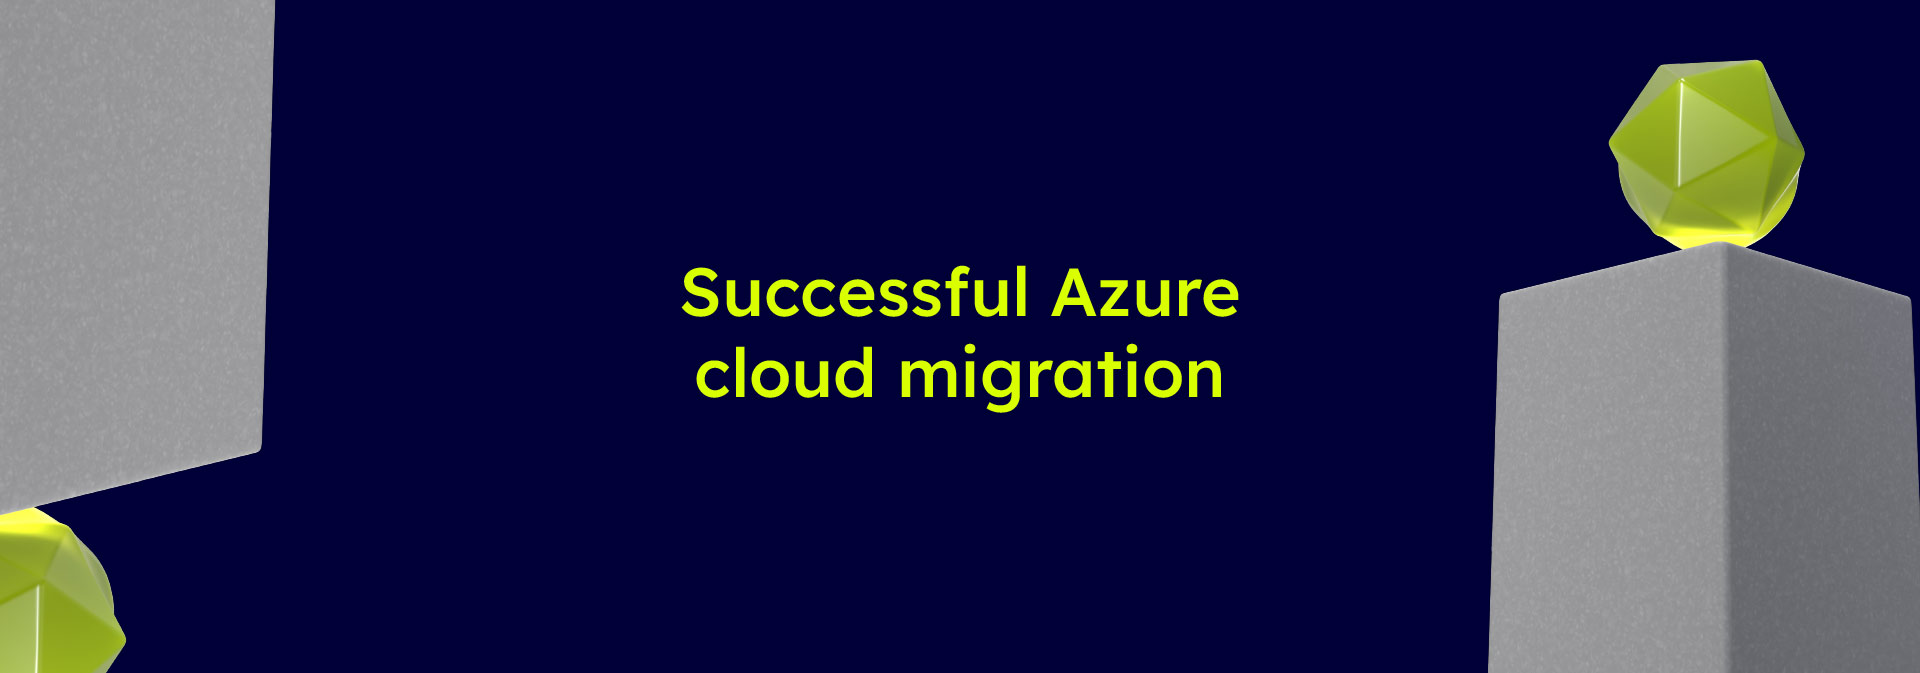 Successful Azure cloud migration